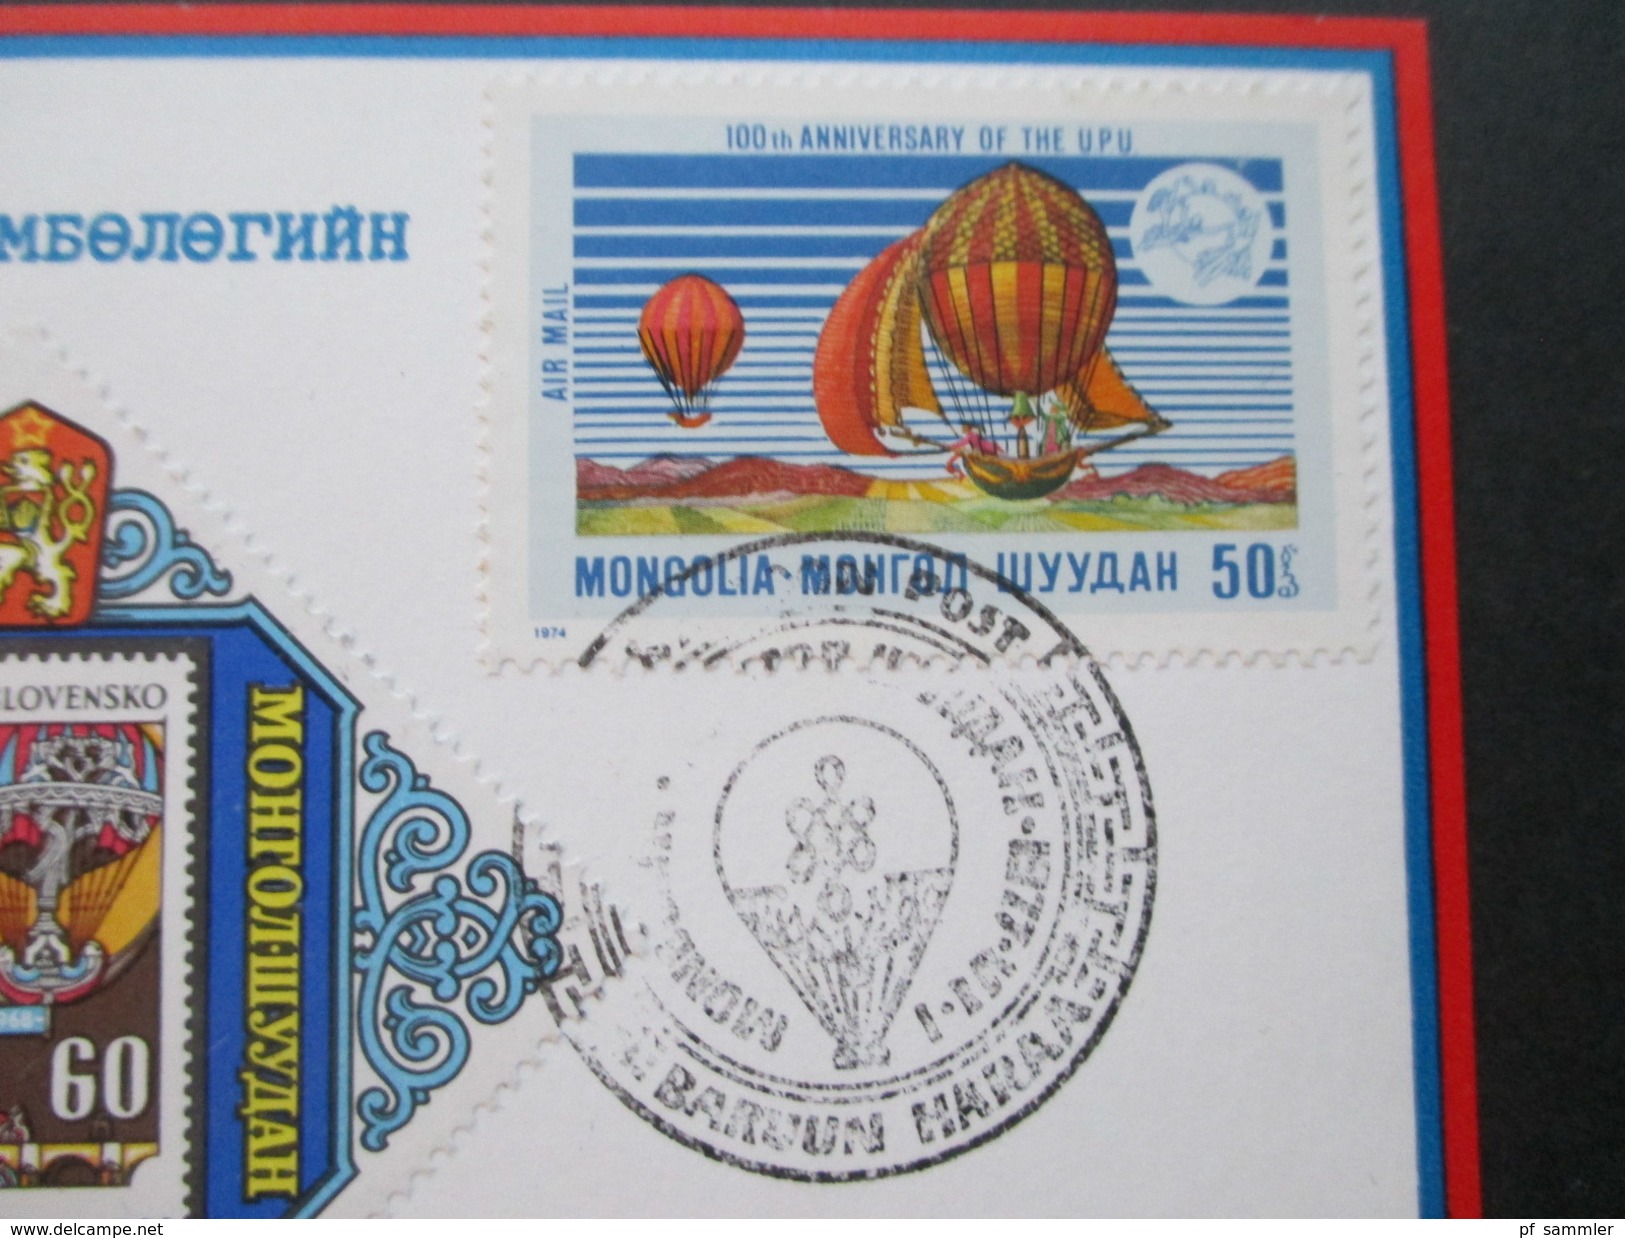 Asien / Mongolei 1977 Ballonpost. UPU. Stille Sonne. Freiballon HB - BEK - Mongolie